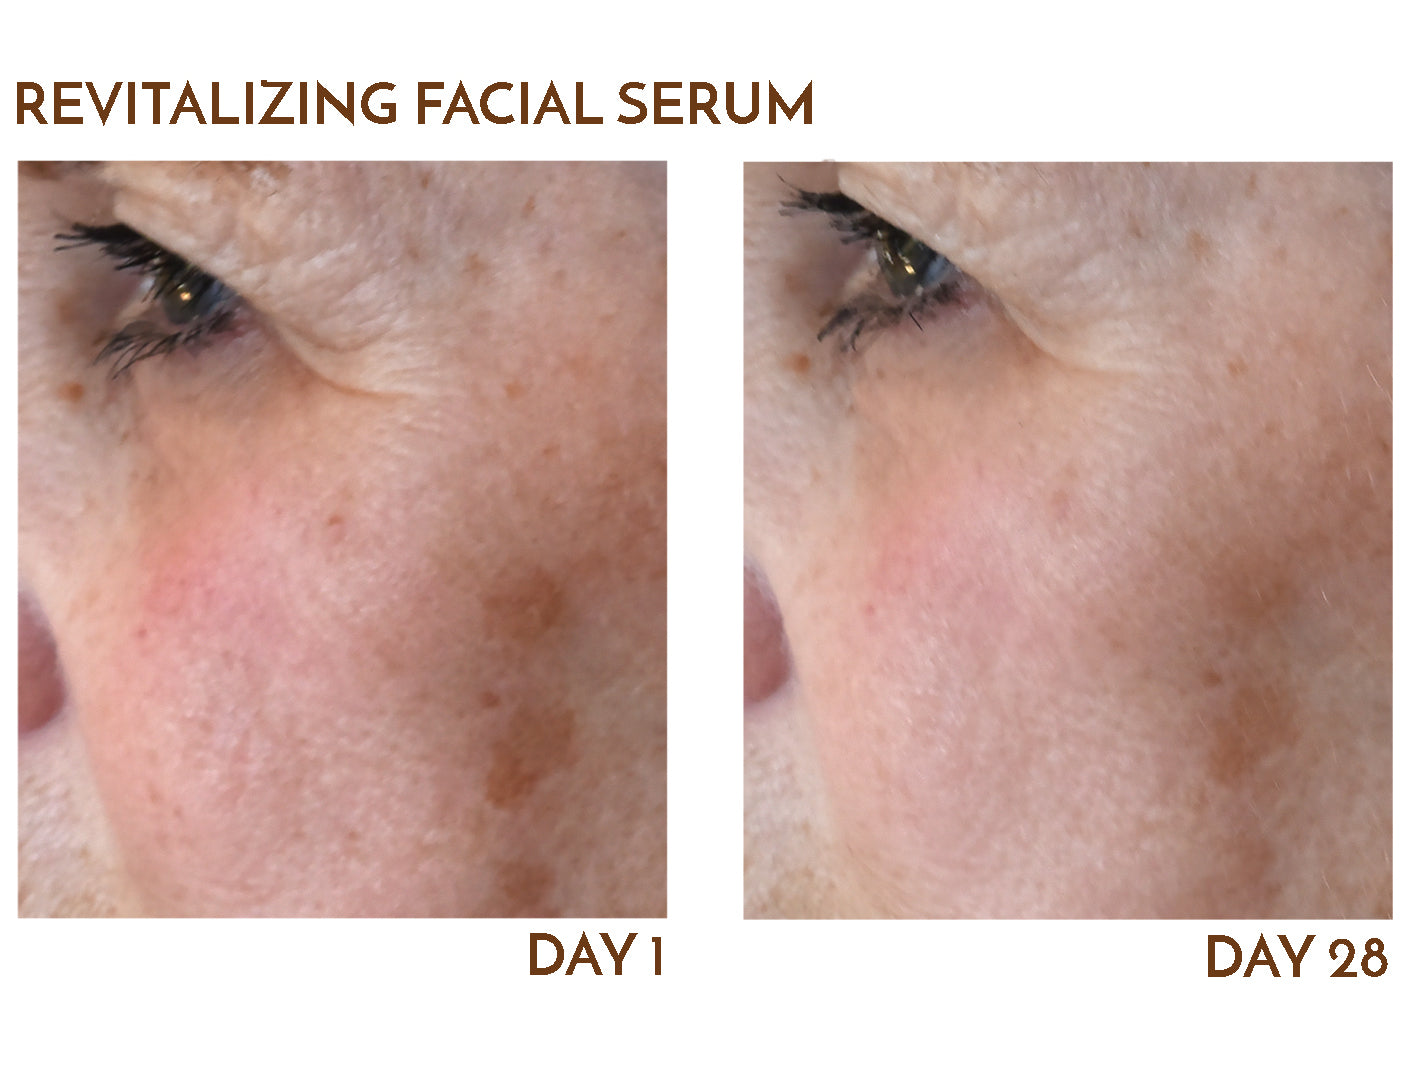 Revitalizing Facial Serum before & after